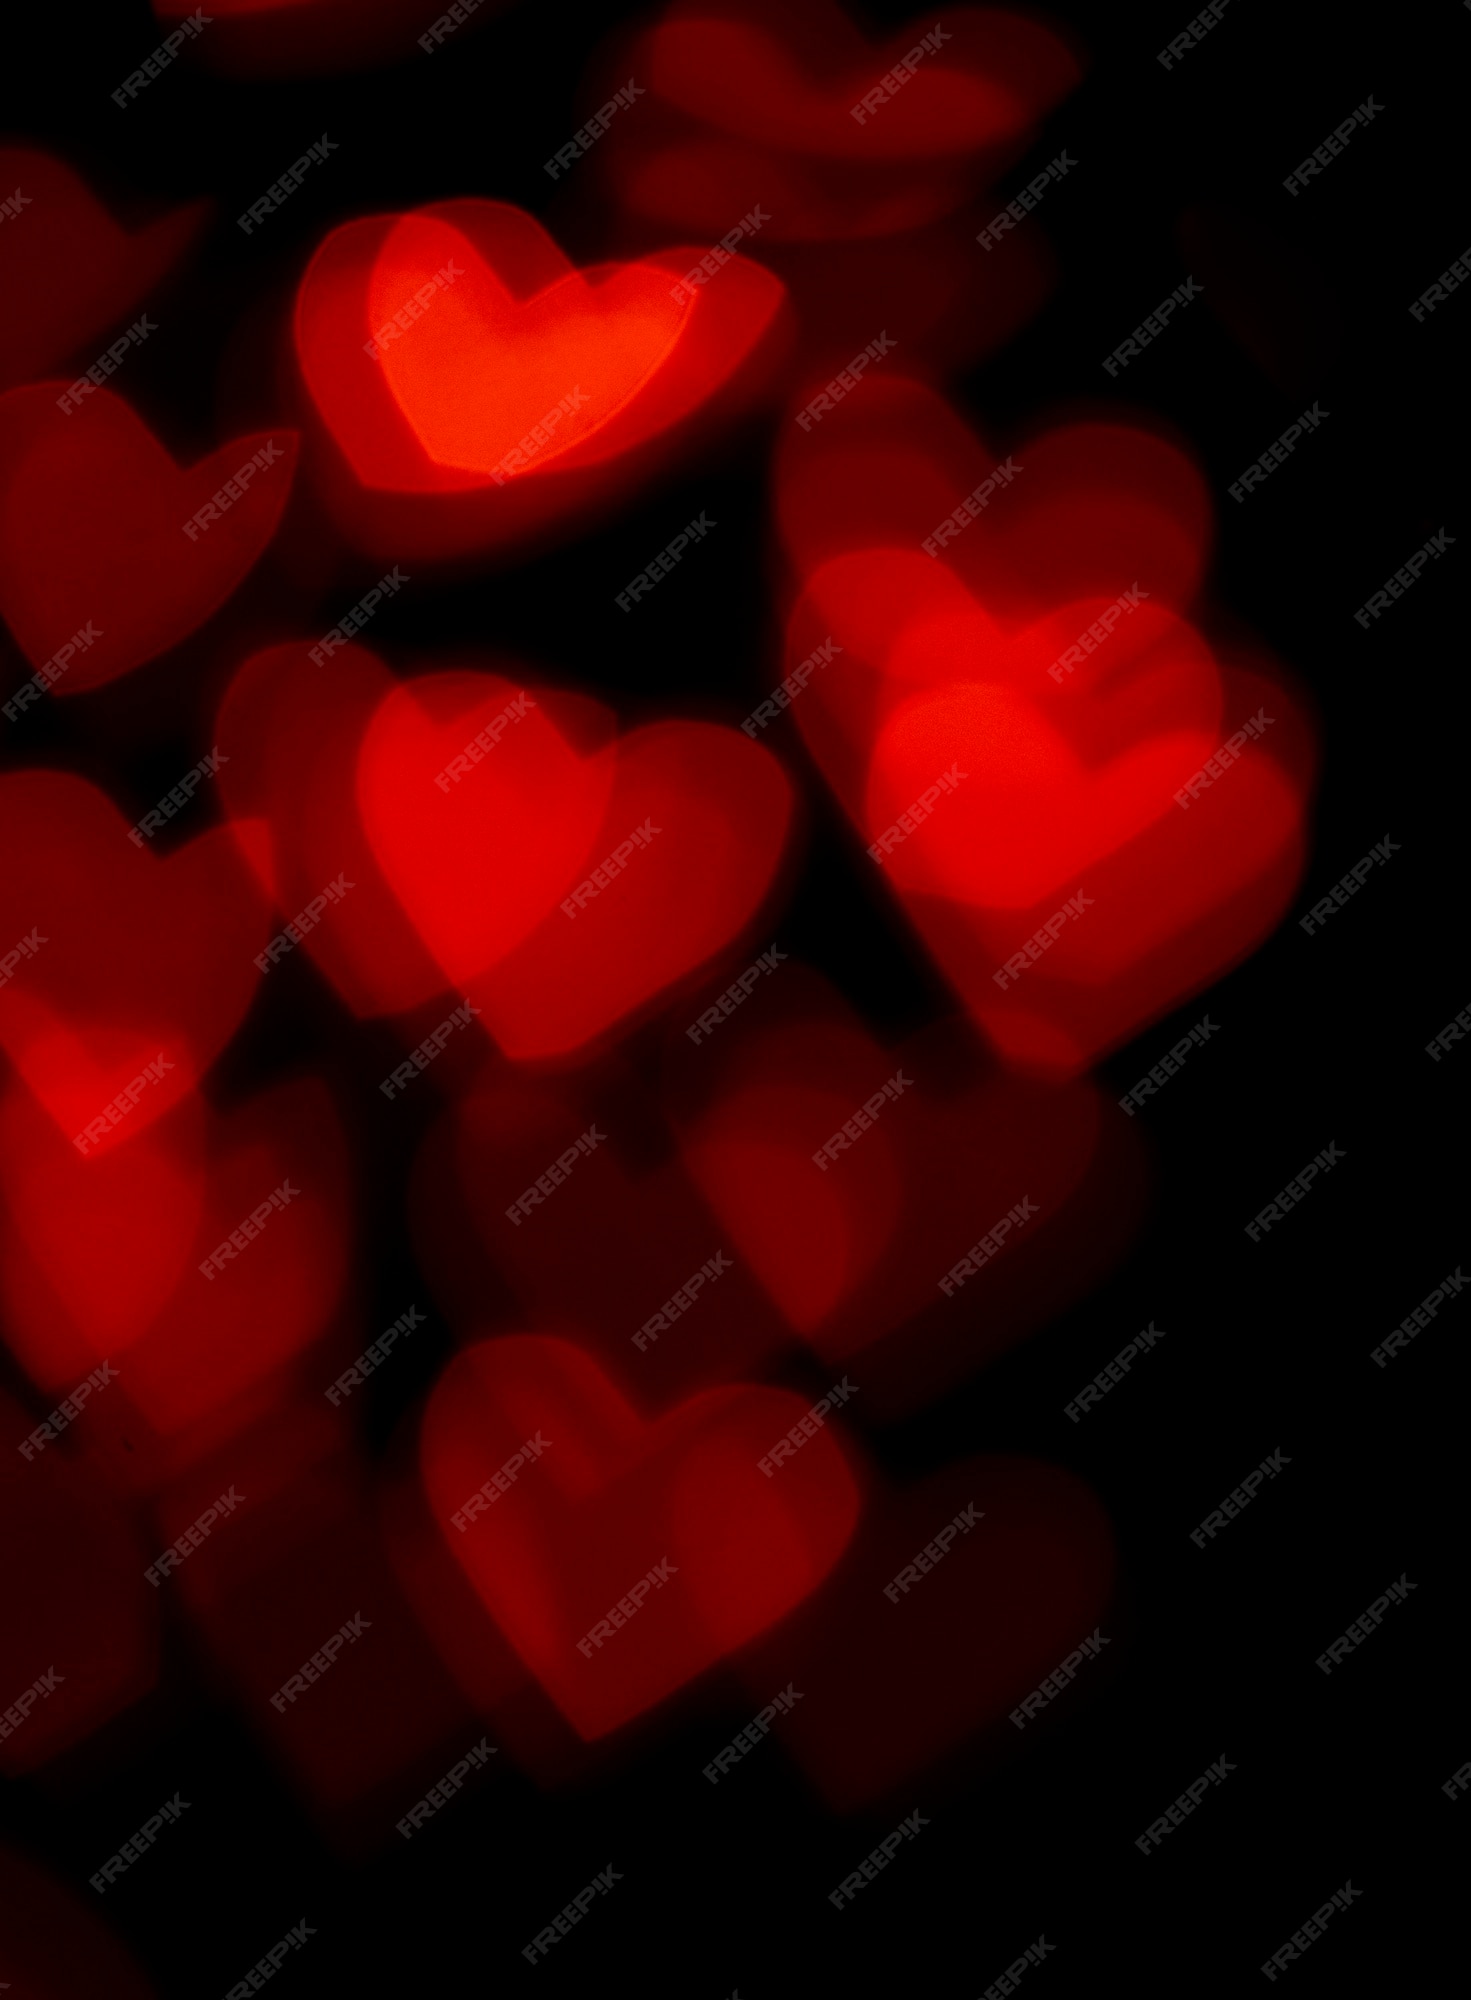 Red Heart Black Background Images - Free Download on Freepik